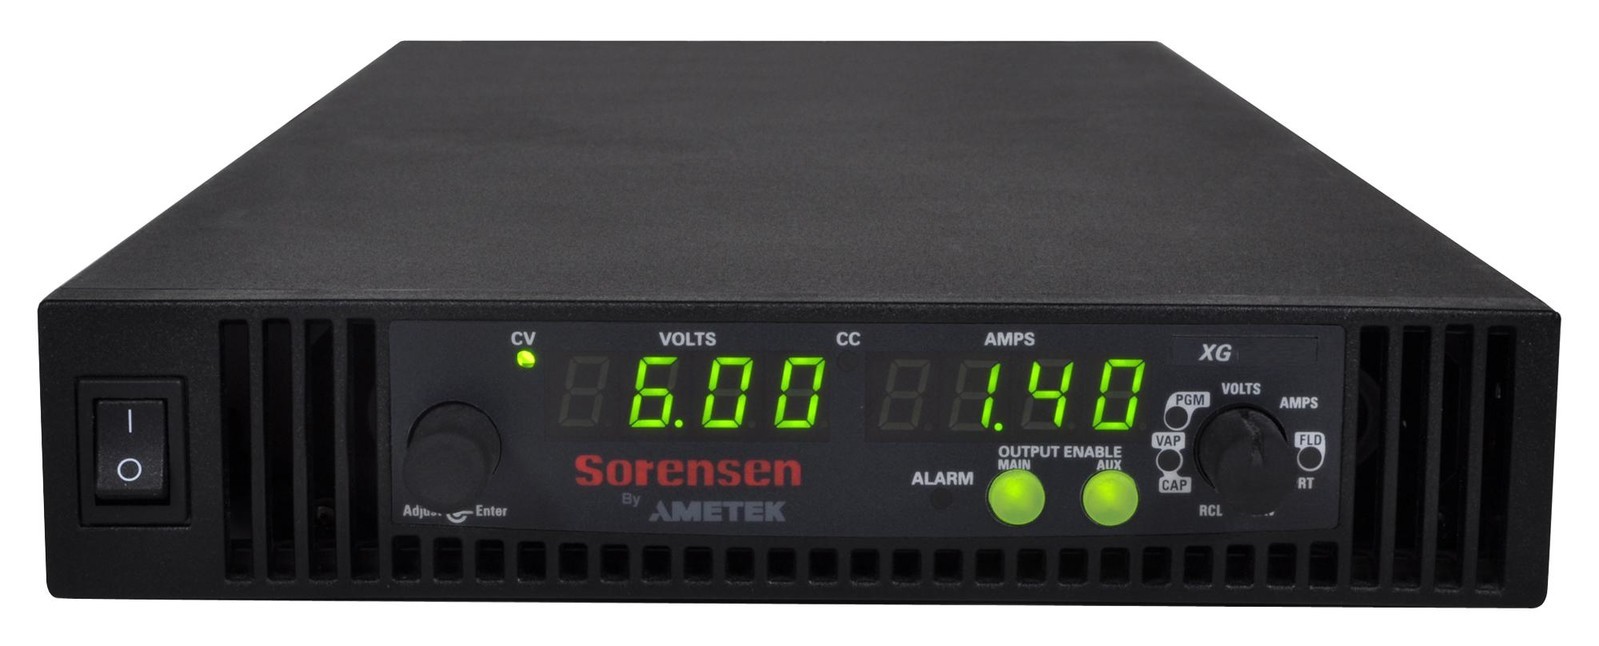 Ametek Programmable Power Xg 600-1.4Mebr Power Supply, Prog, 1.4A, 600V, 850W